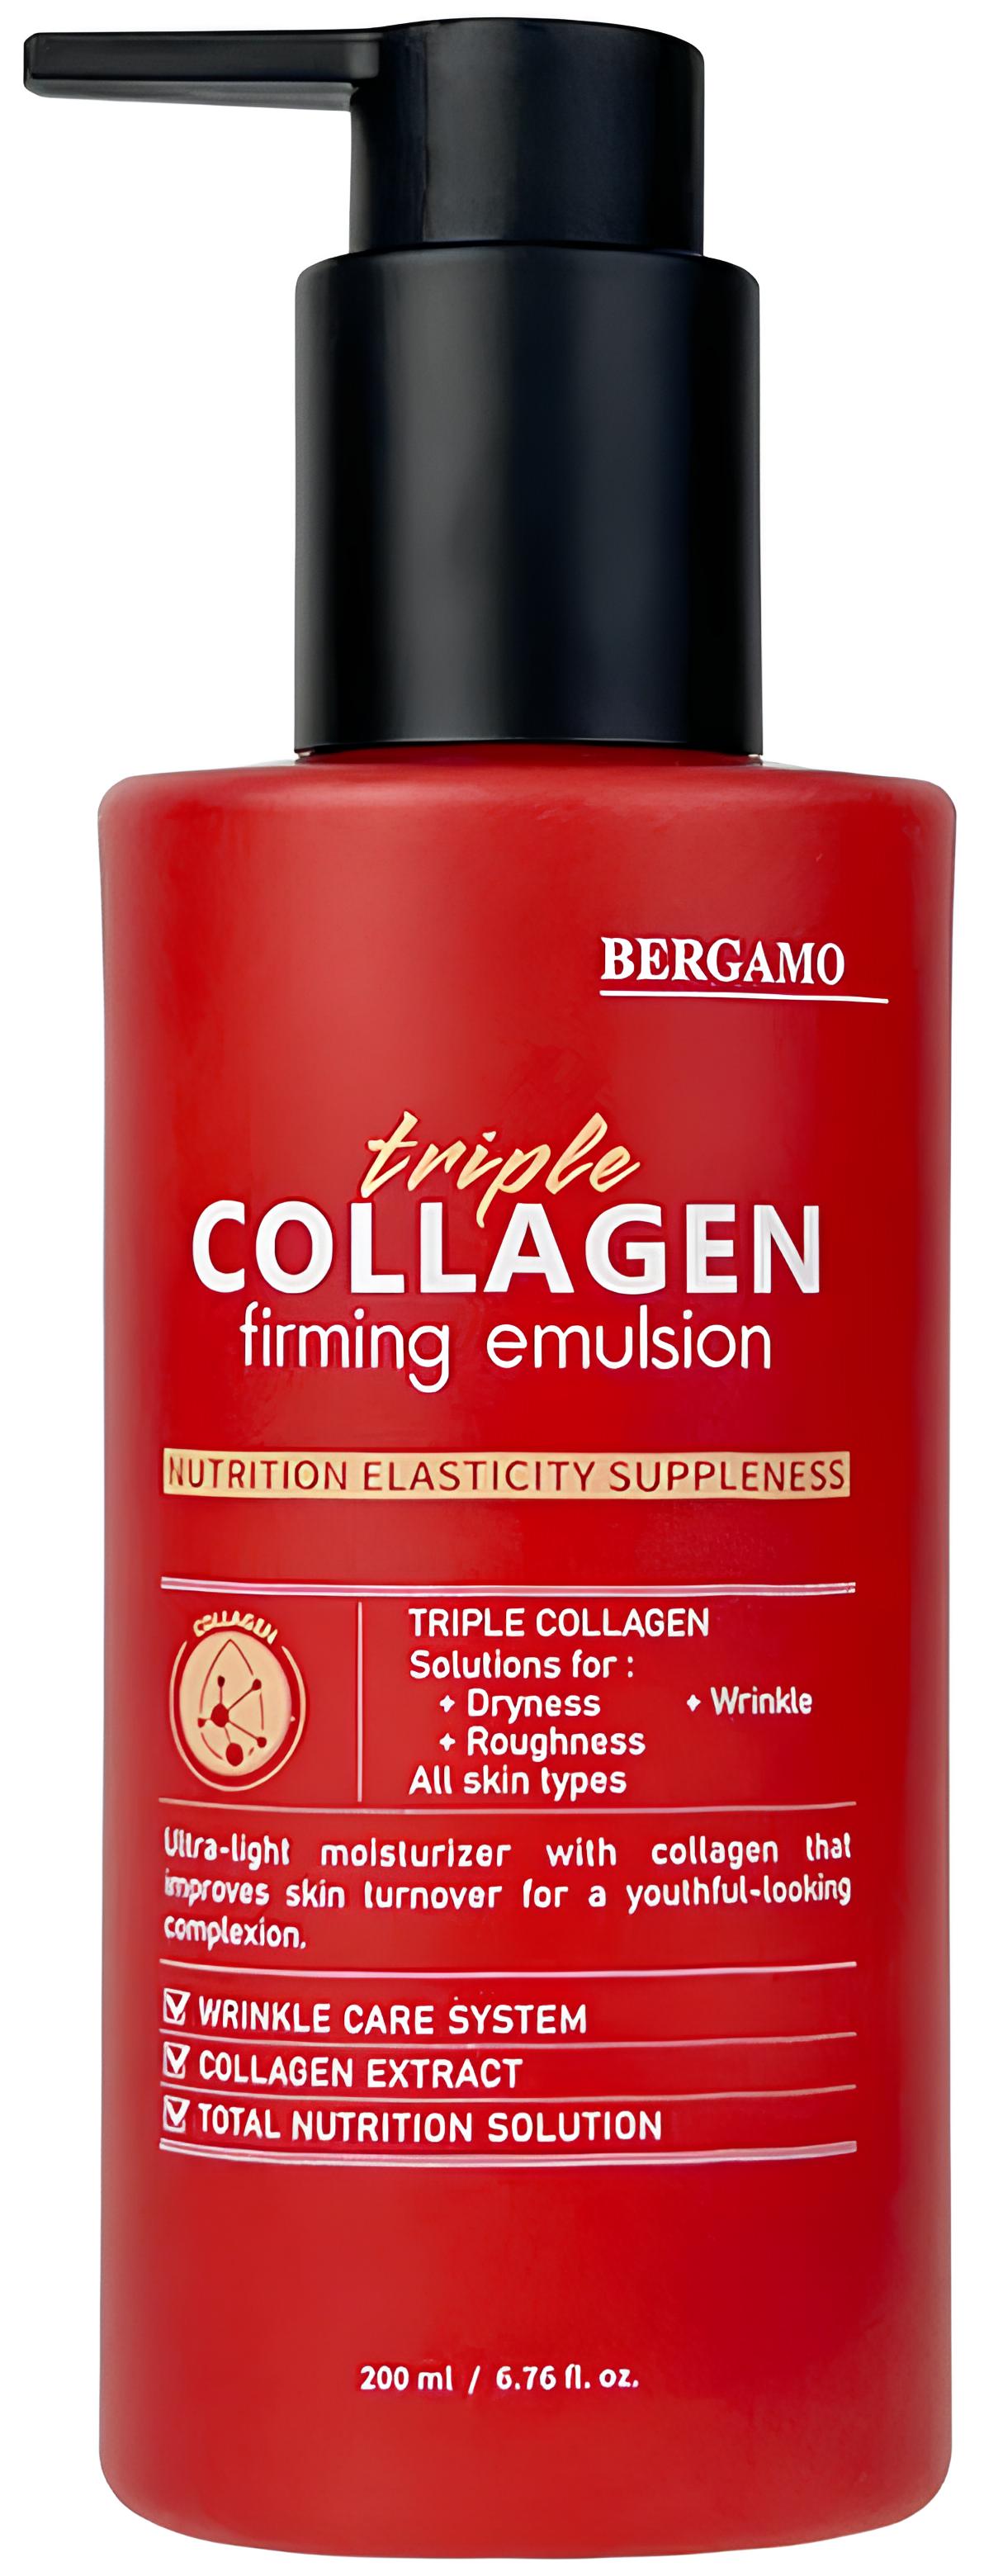 Укрепляющая эмульсия с тройным коллагеном Bergamo Triple Collagen Firming Emulsion 200 мл farmstay collagen emulsion эмульсия увлажняющая с коллагеном 200 мл